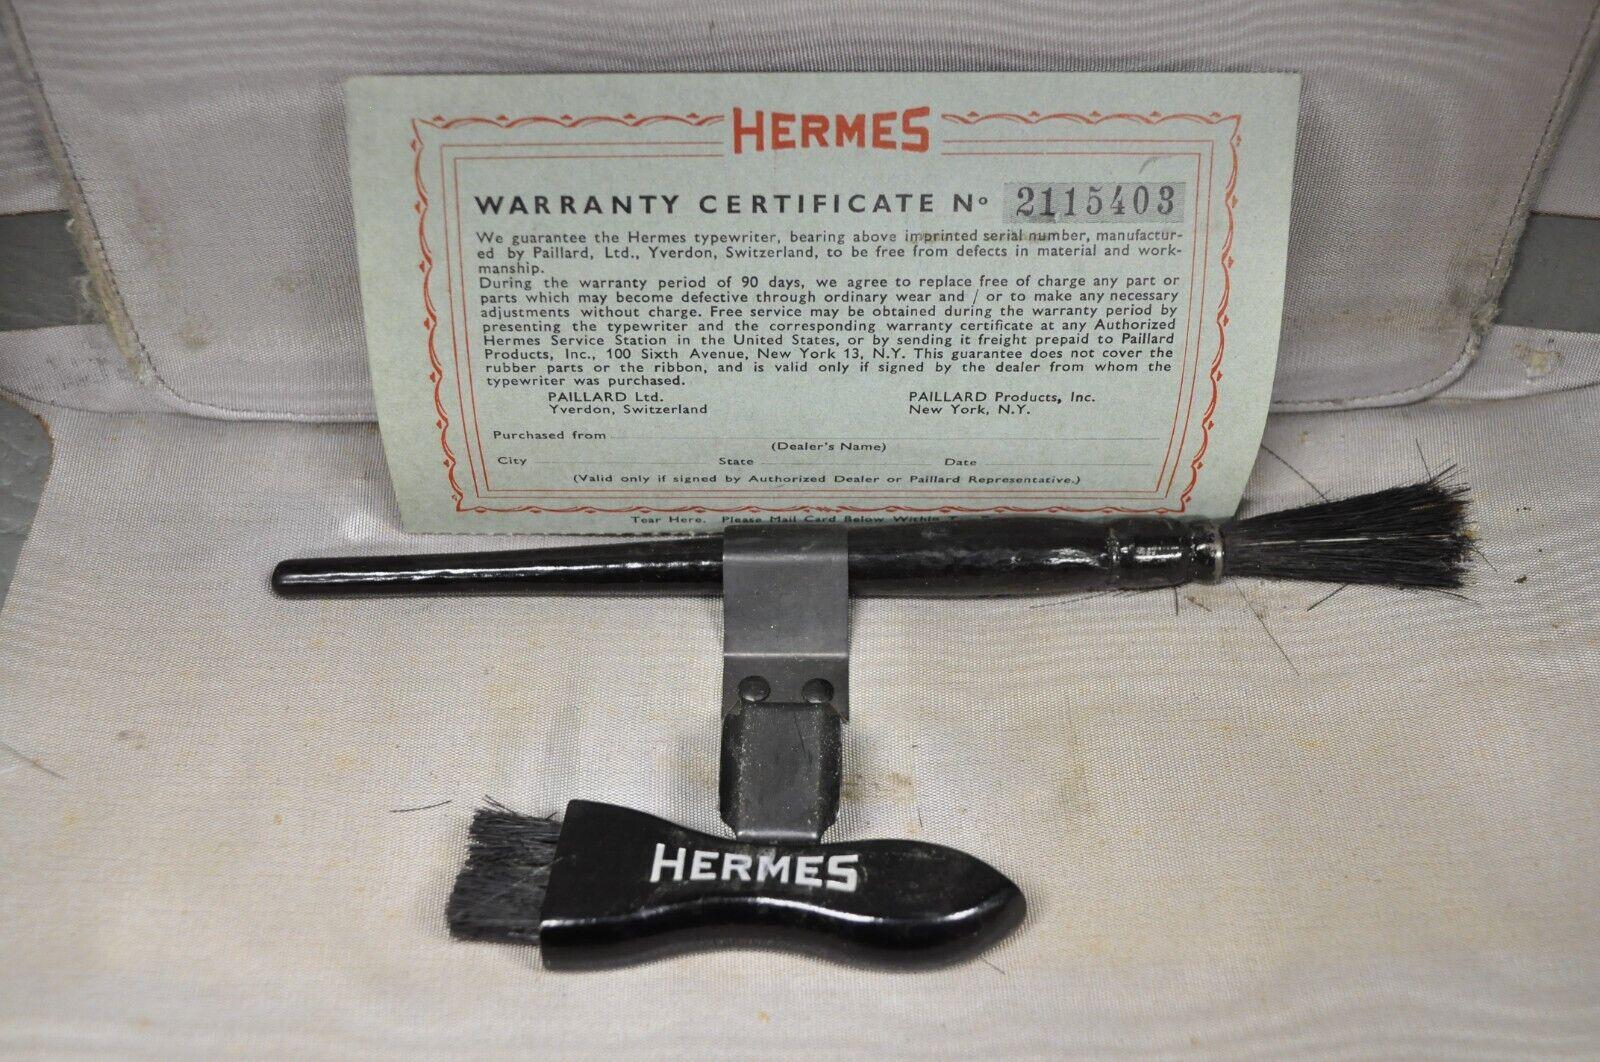 Metal Vintage Hermes 2000 by Paillard Manual Typewriter with Green Carrying Case